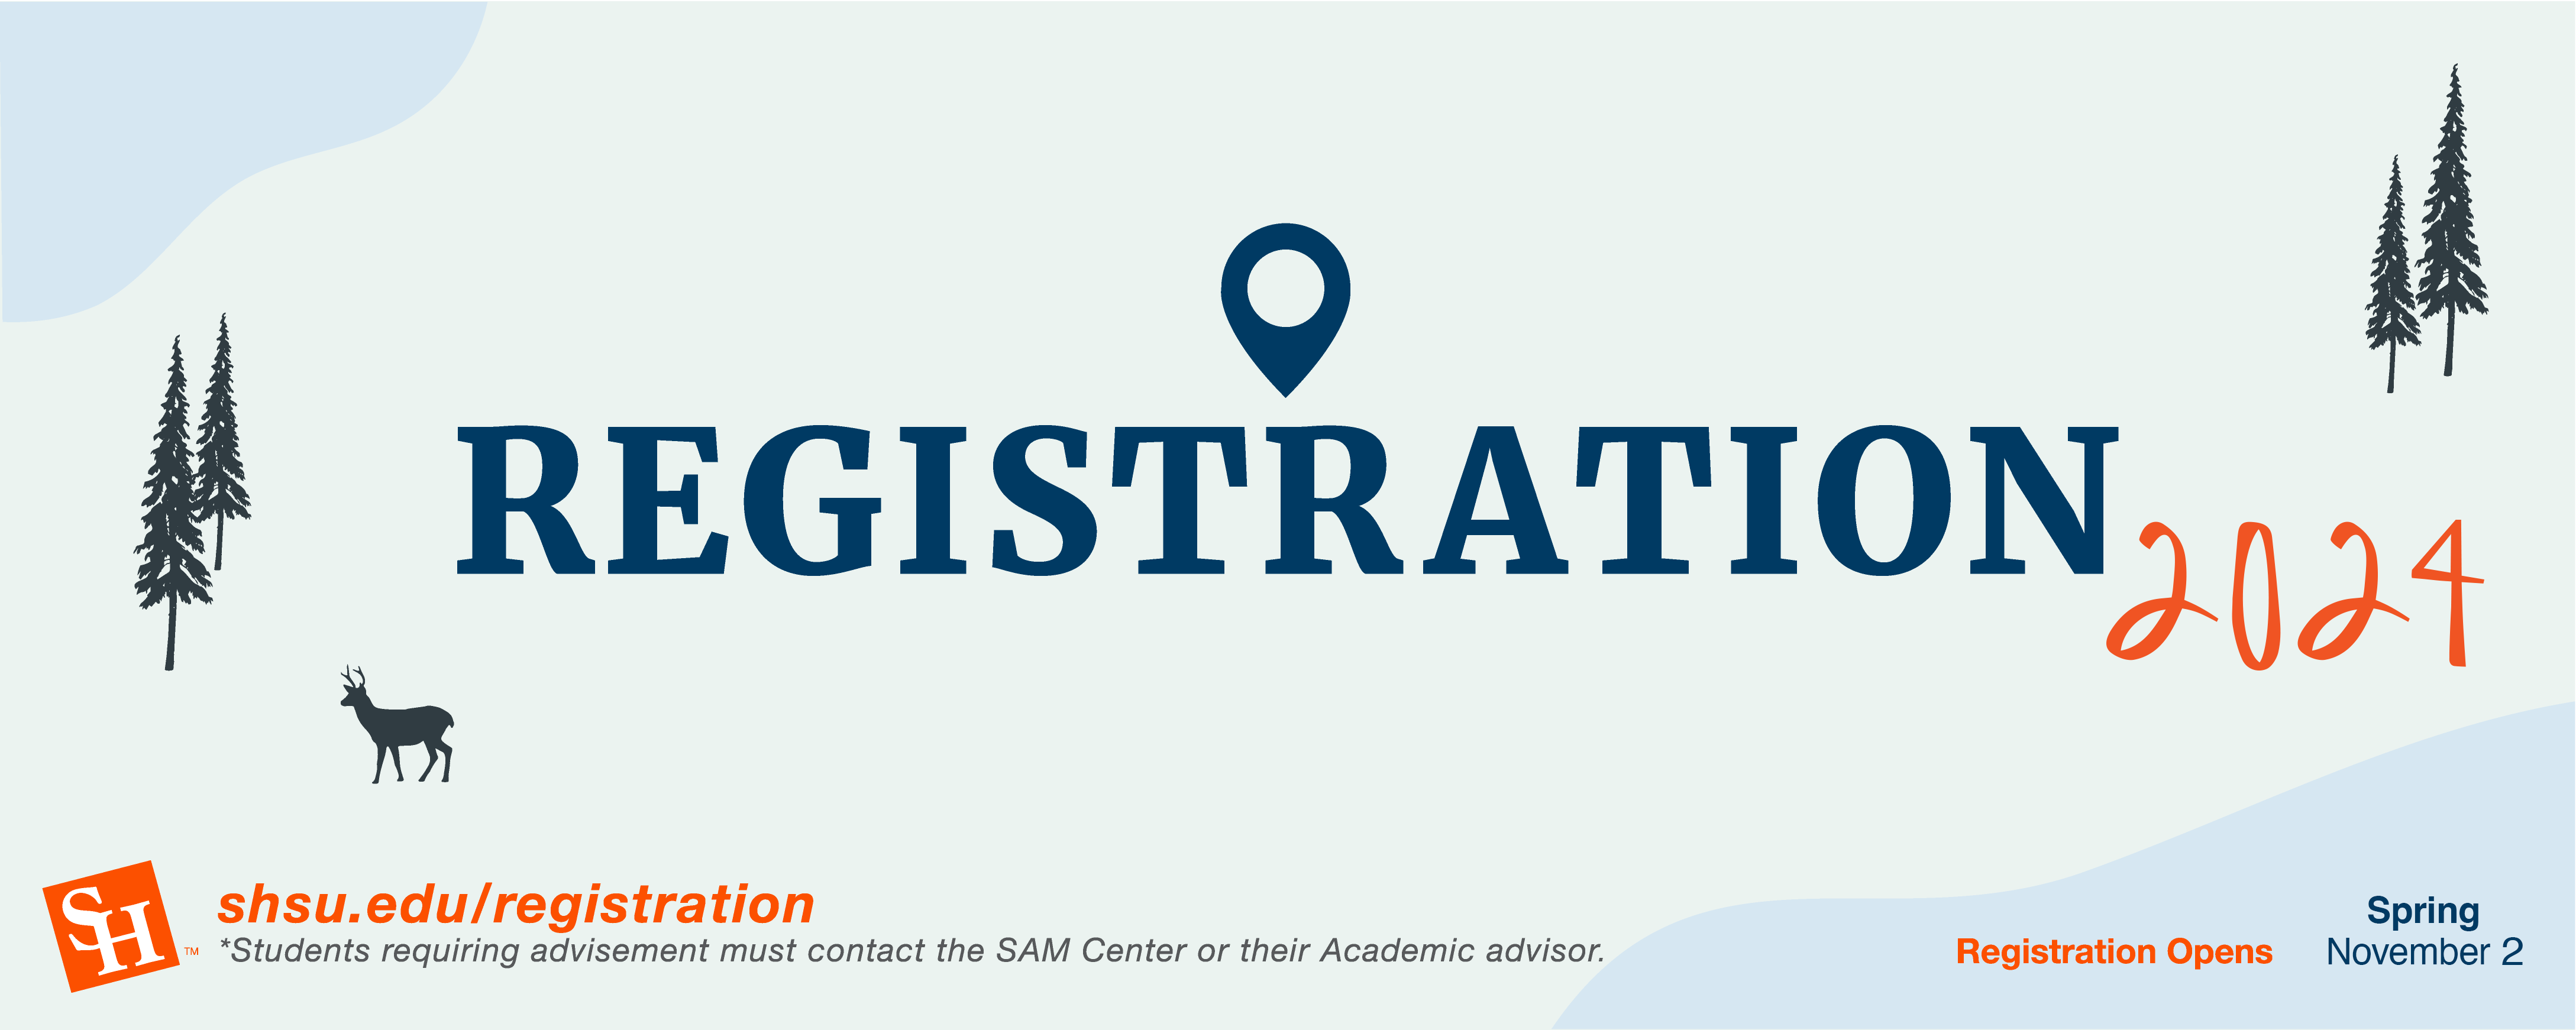 Registration 2024, shsu.edu/registration, Spring registration opens November 2